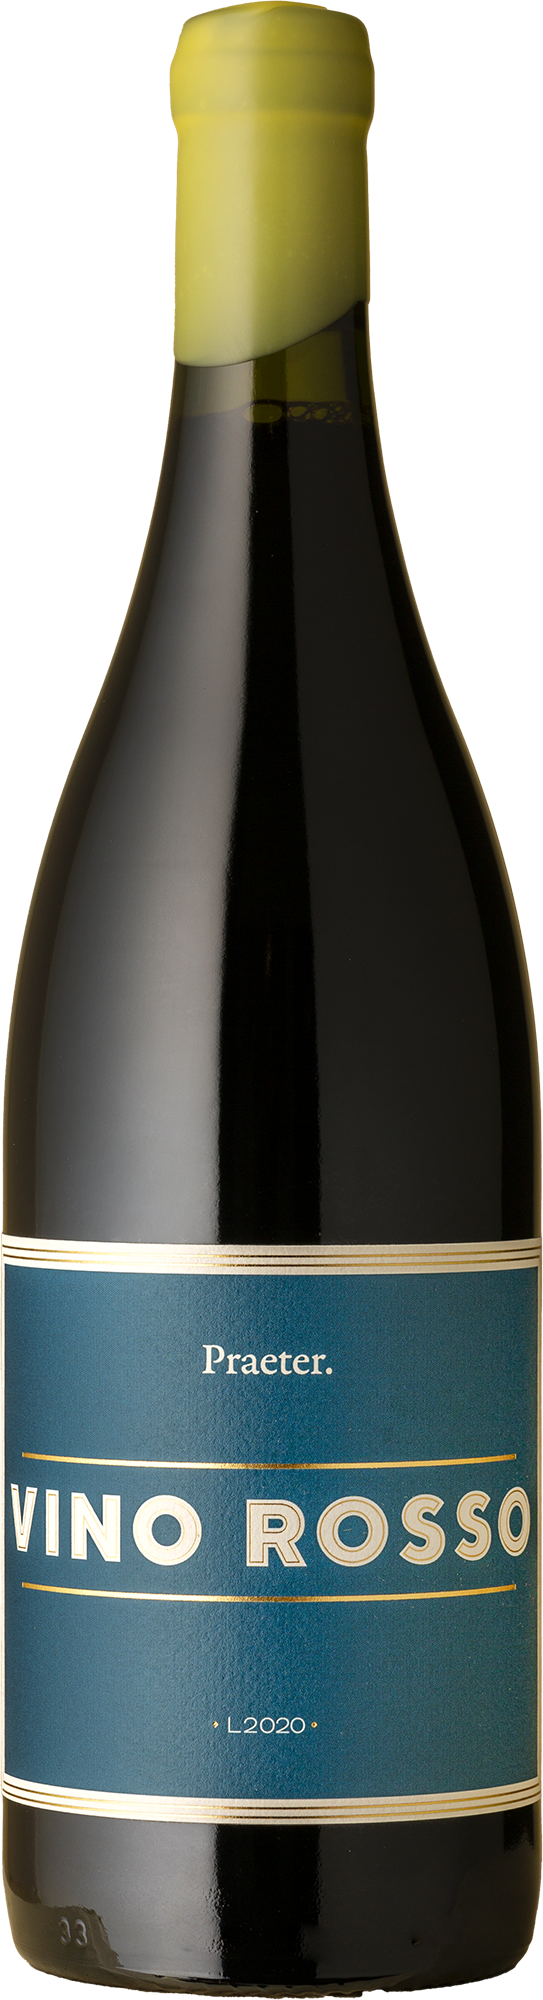 Praeter - Vino Rosso 2020 Red Wine